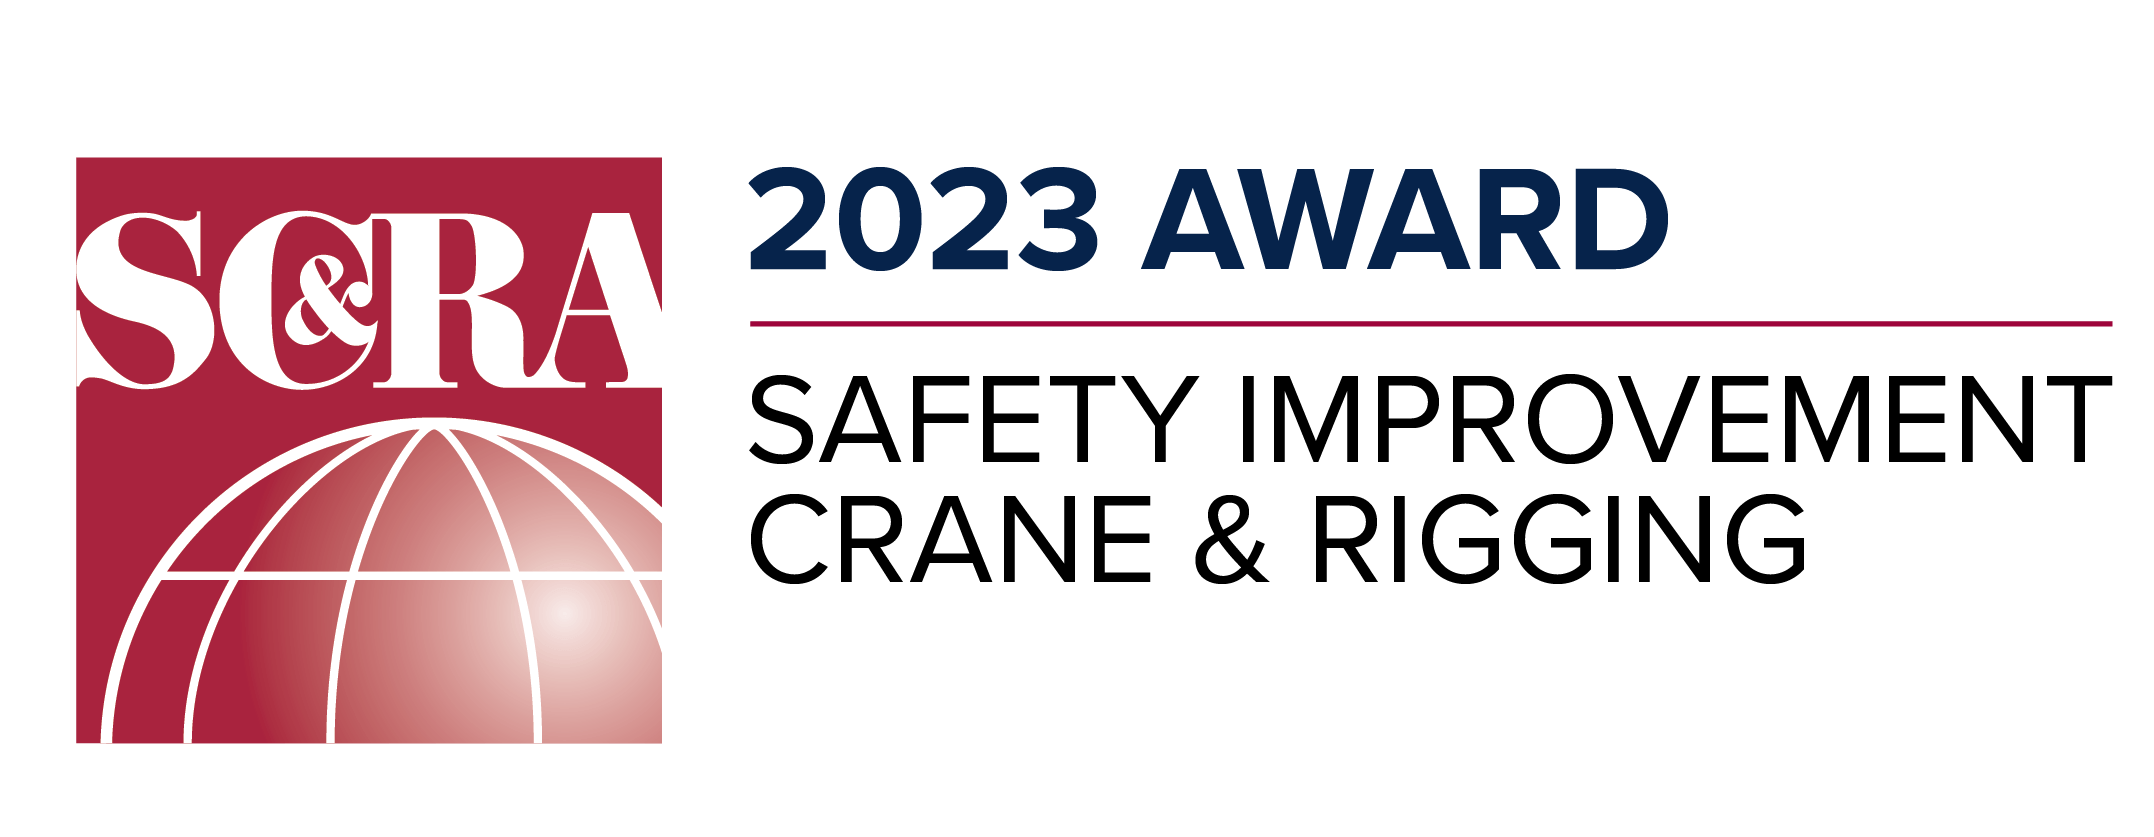 2023 Crane & Rigging Group Safety Improvement Award